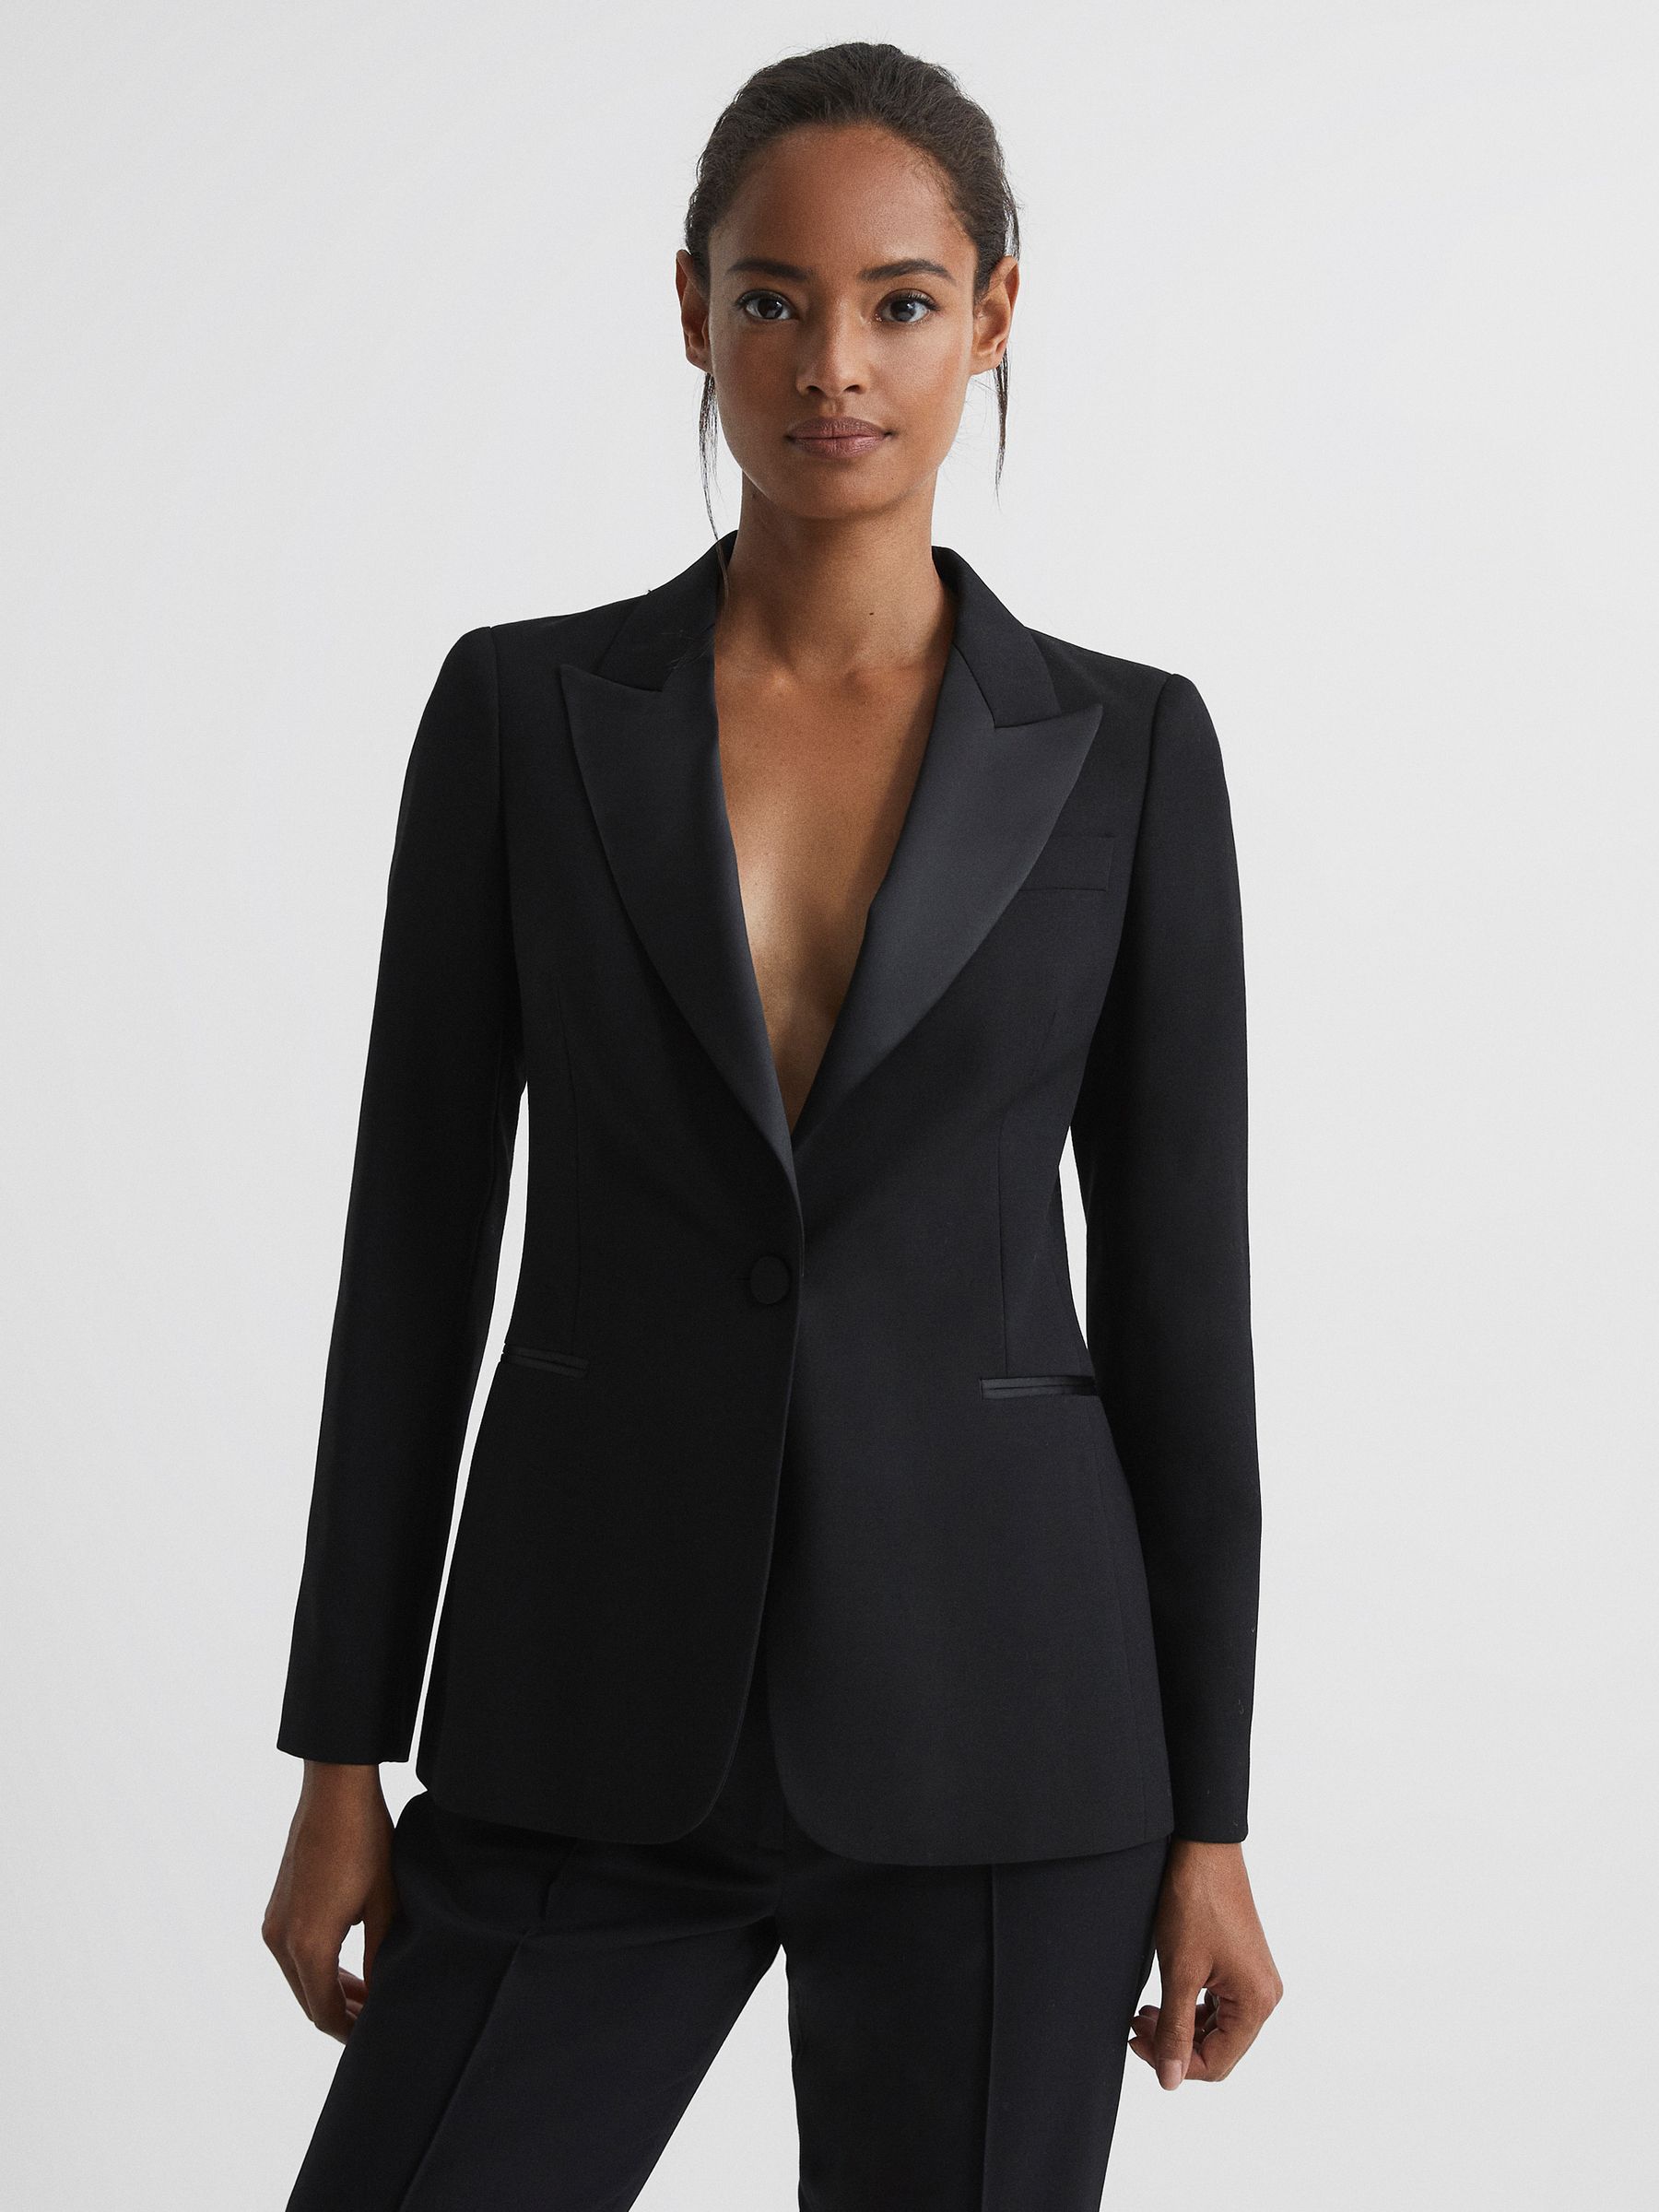 Reiss Sofia Tailored Fit Wool Blend Tuxedo Blazer | REISS USA